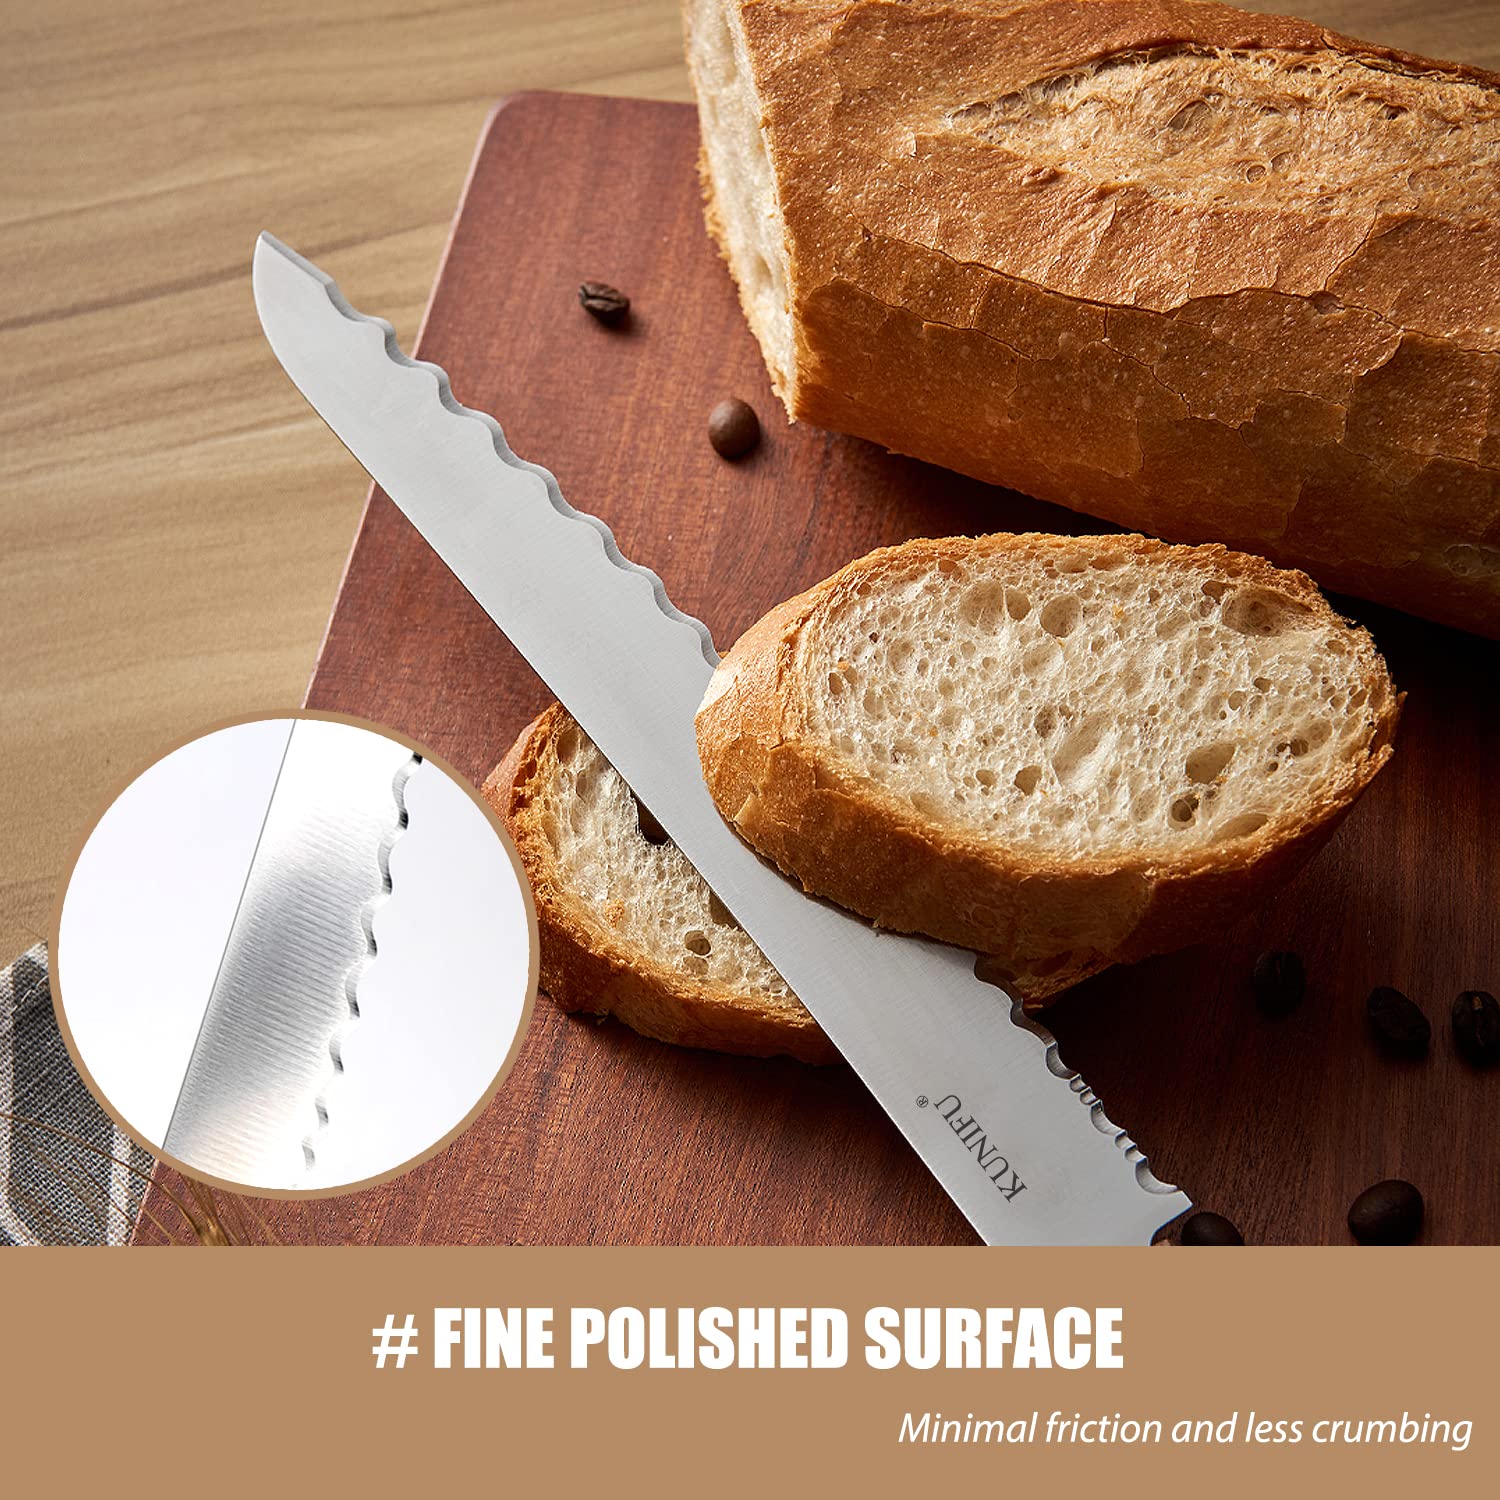 KUNIFU Bread Knife, 9.0 Inch Serrated Knife For Homemade Bread, Bread Slicer For Sourdough Cake Bagels